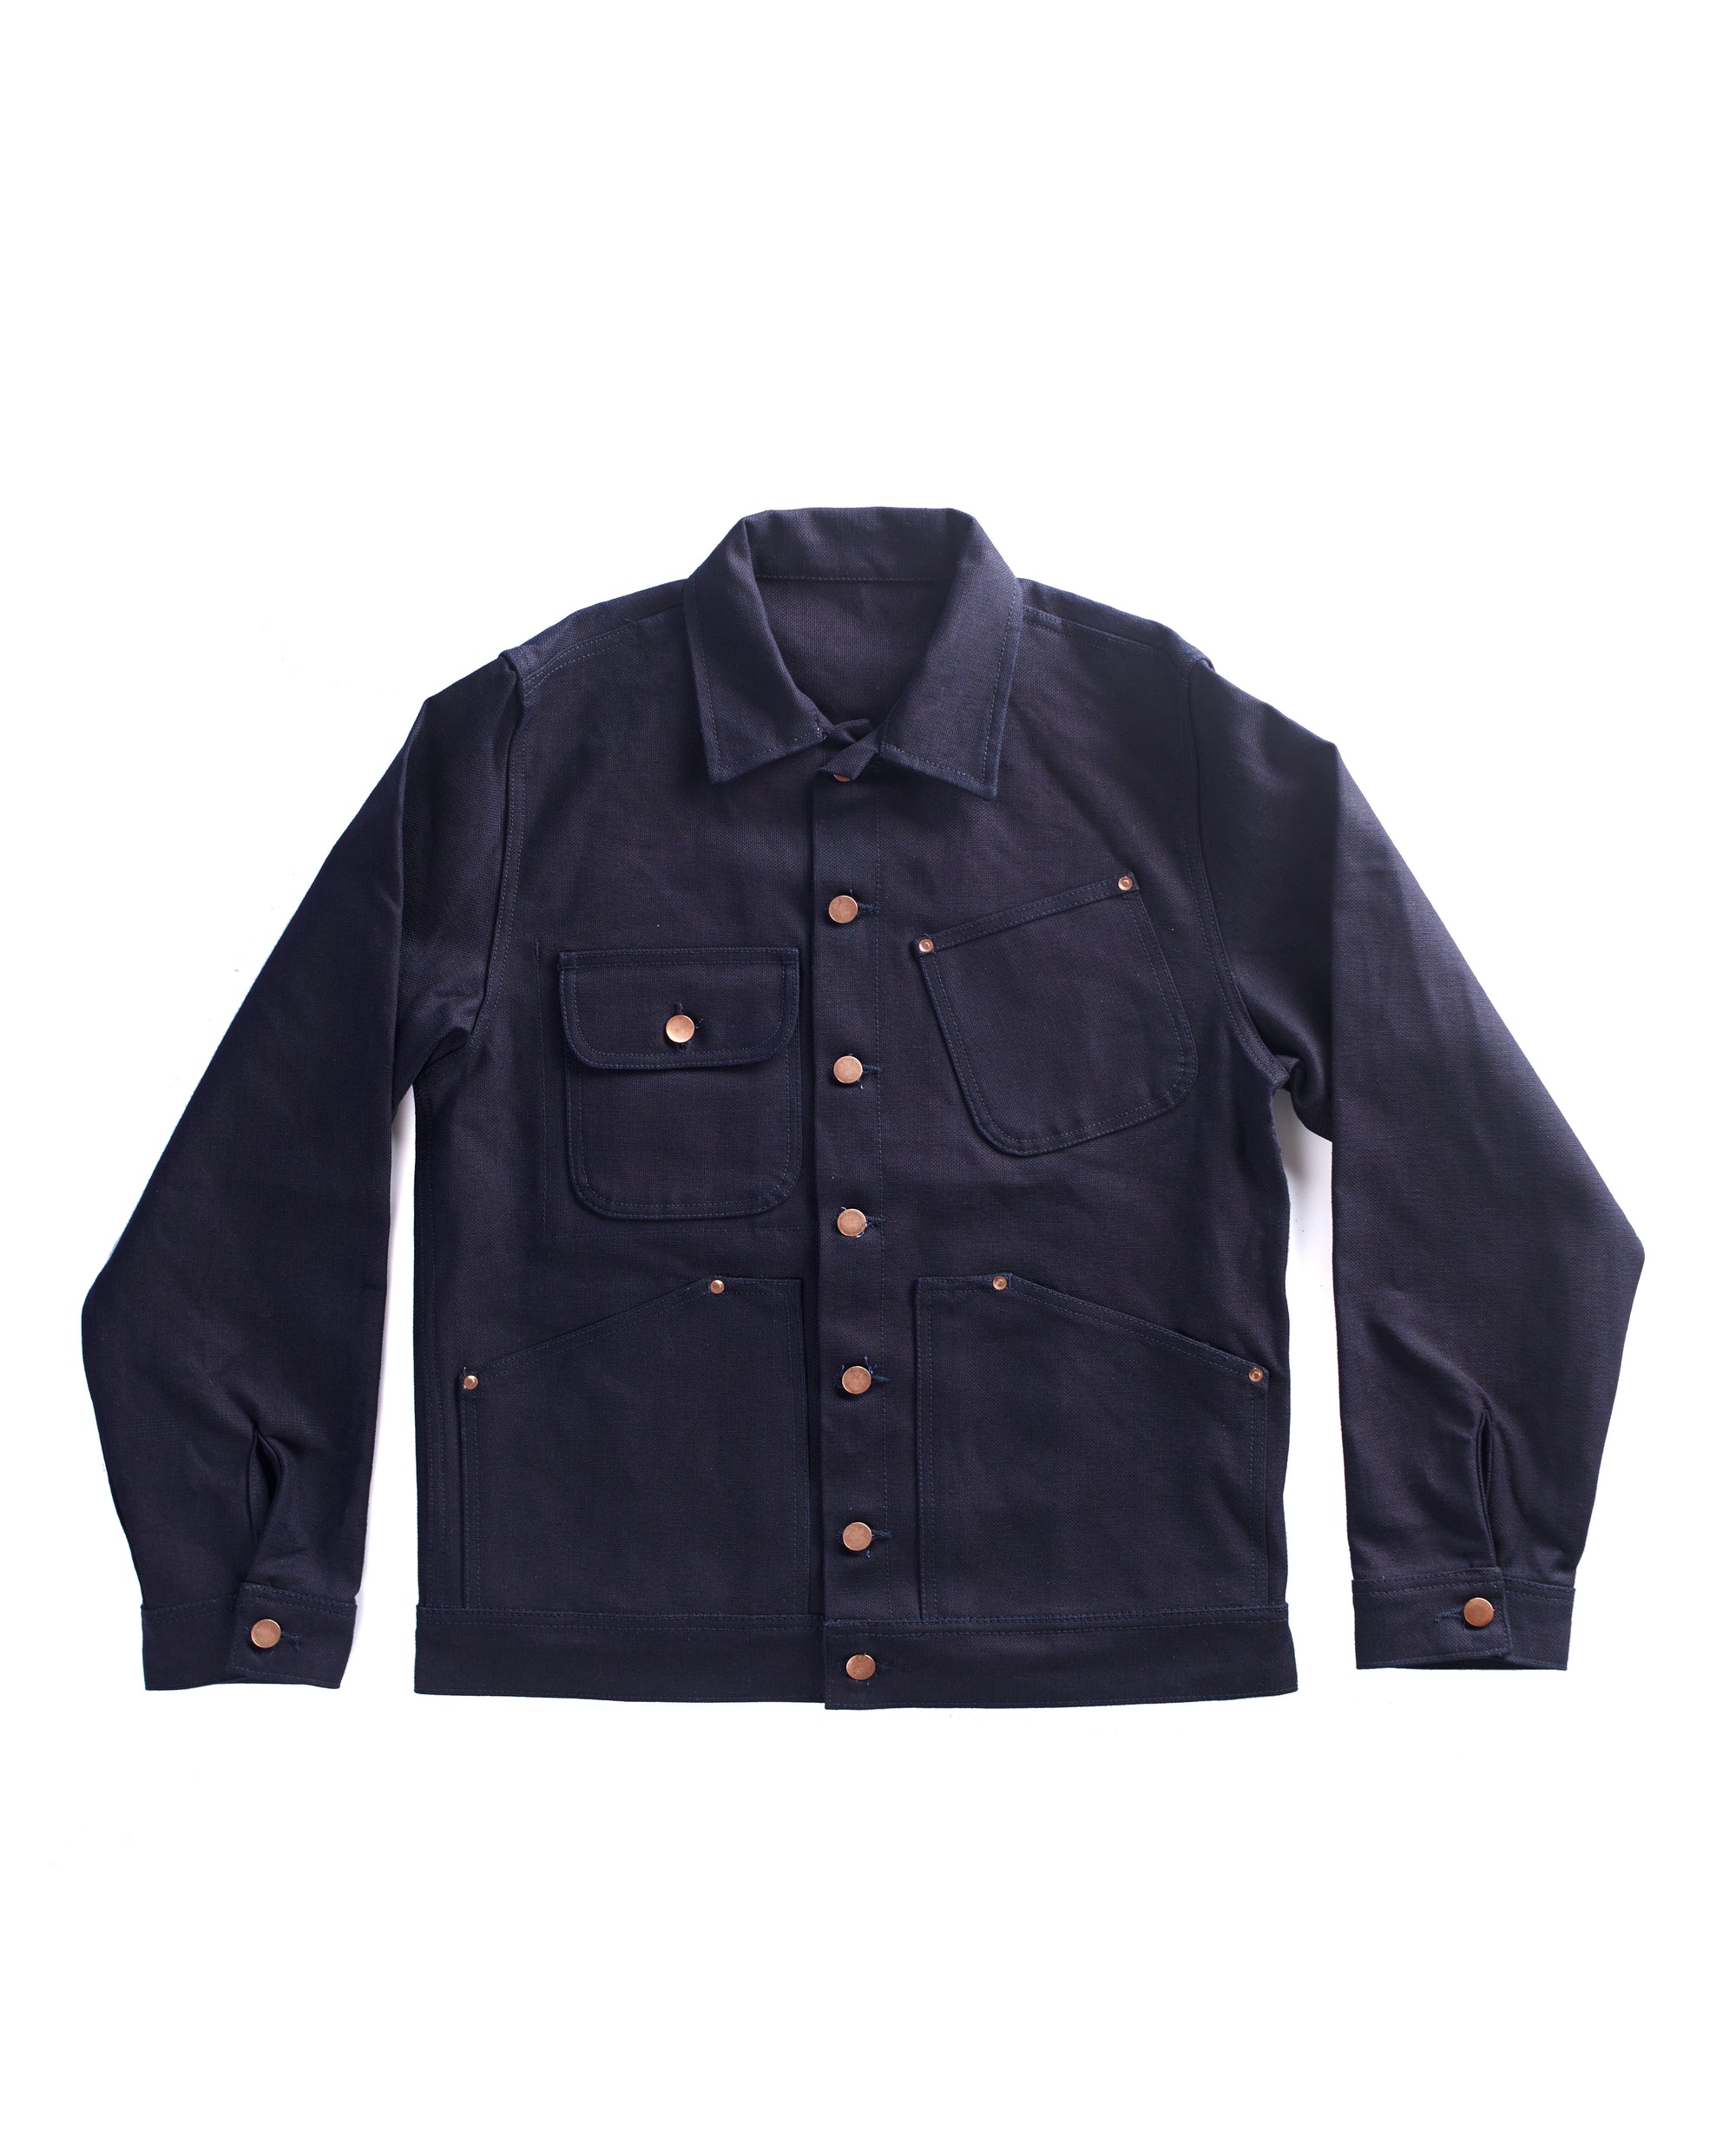 Waxed Riders Jacket in Oak – Porterhouse Clothing & Supply